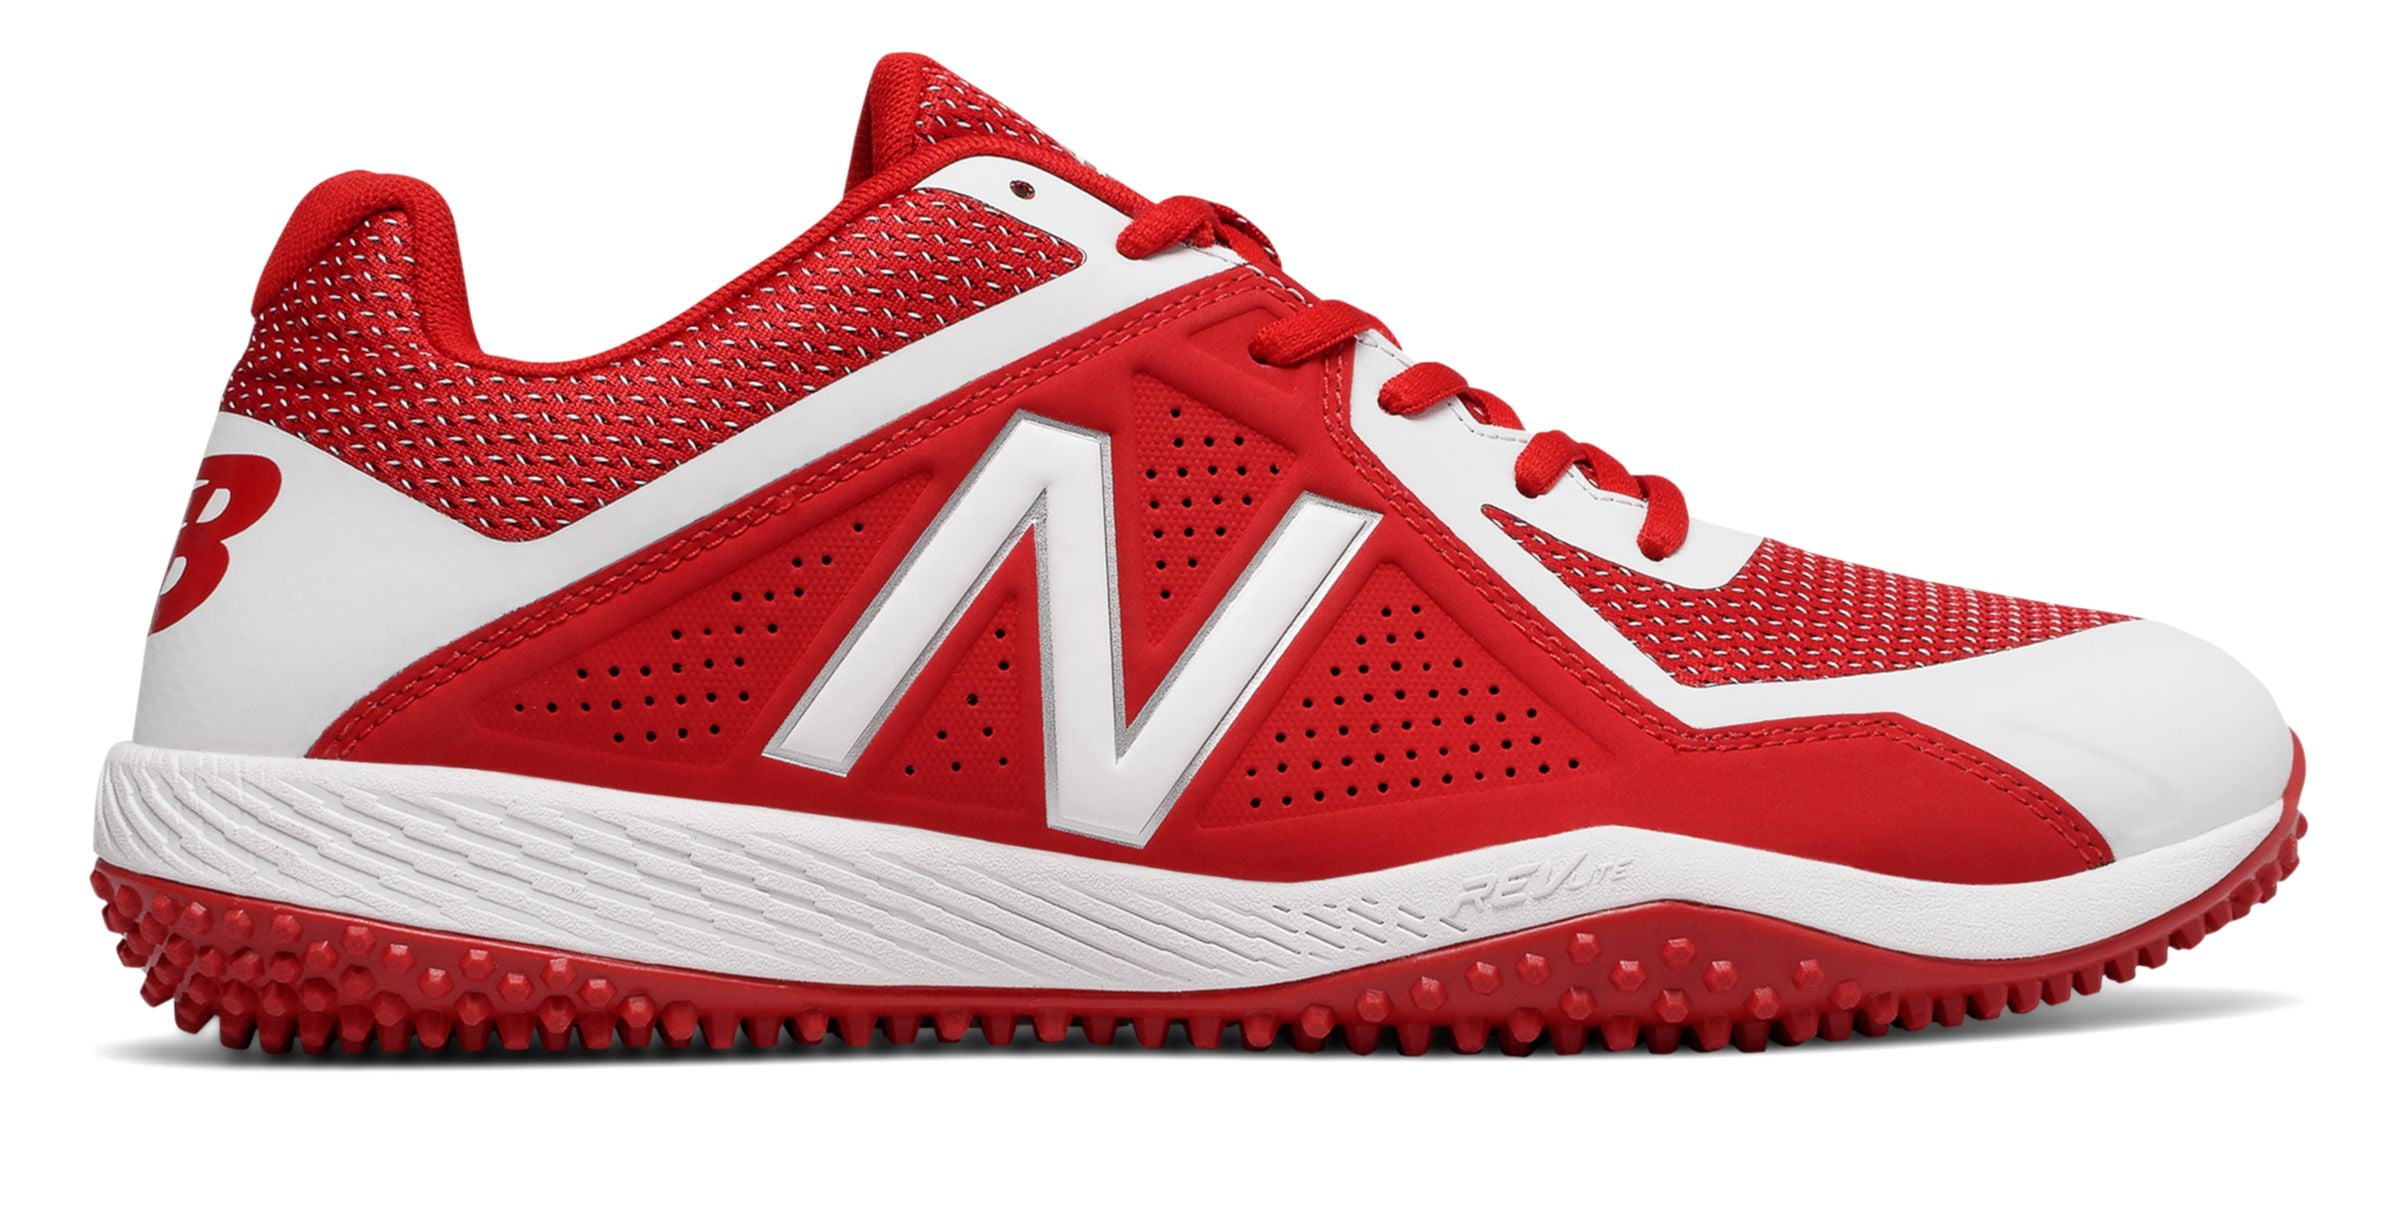 New Balance Men's 4040 V4 Turf Baseball Shoe, Red/White, 16 2E US